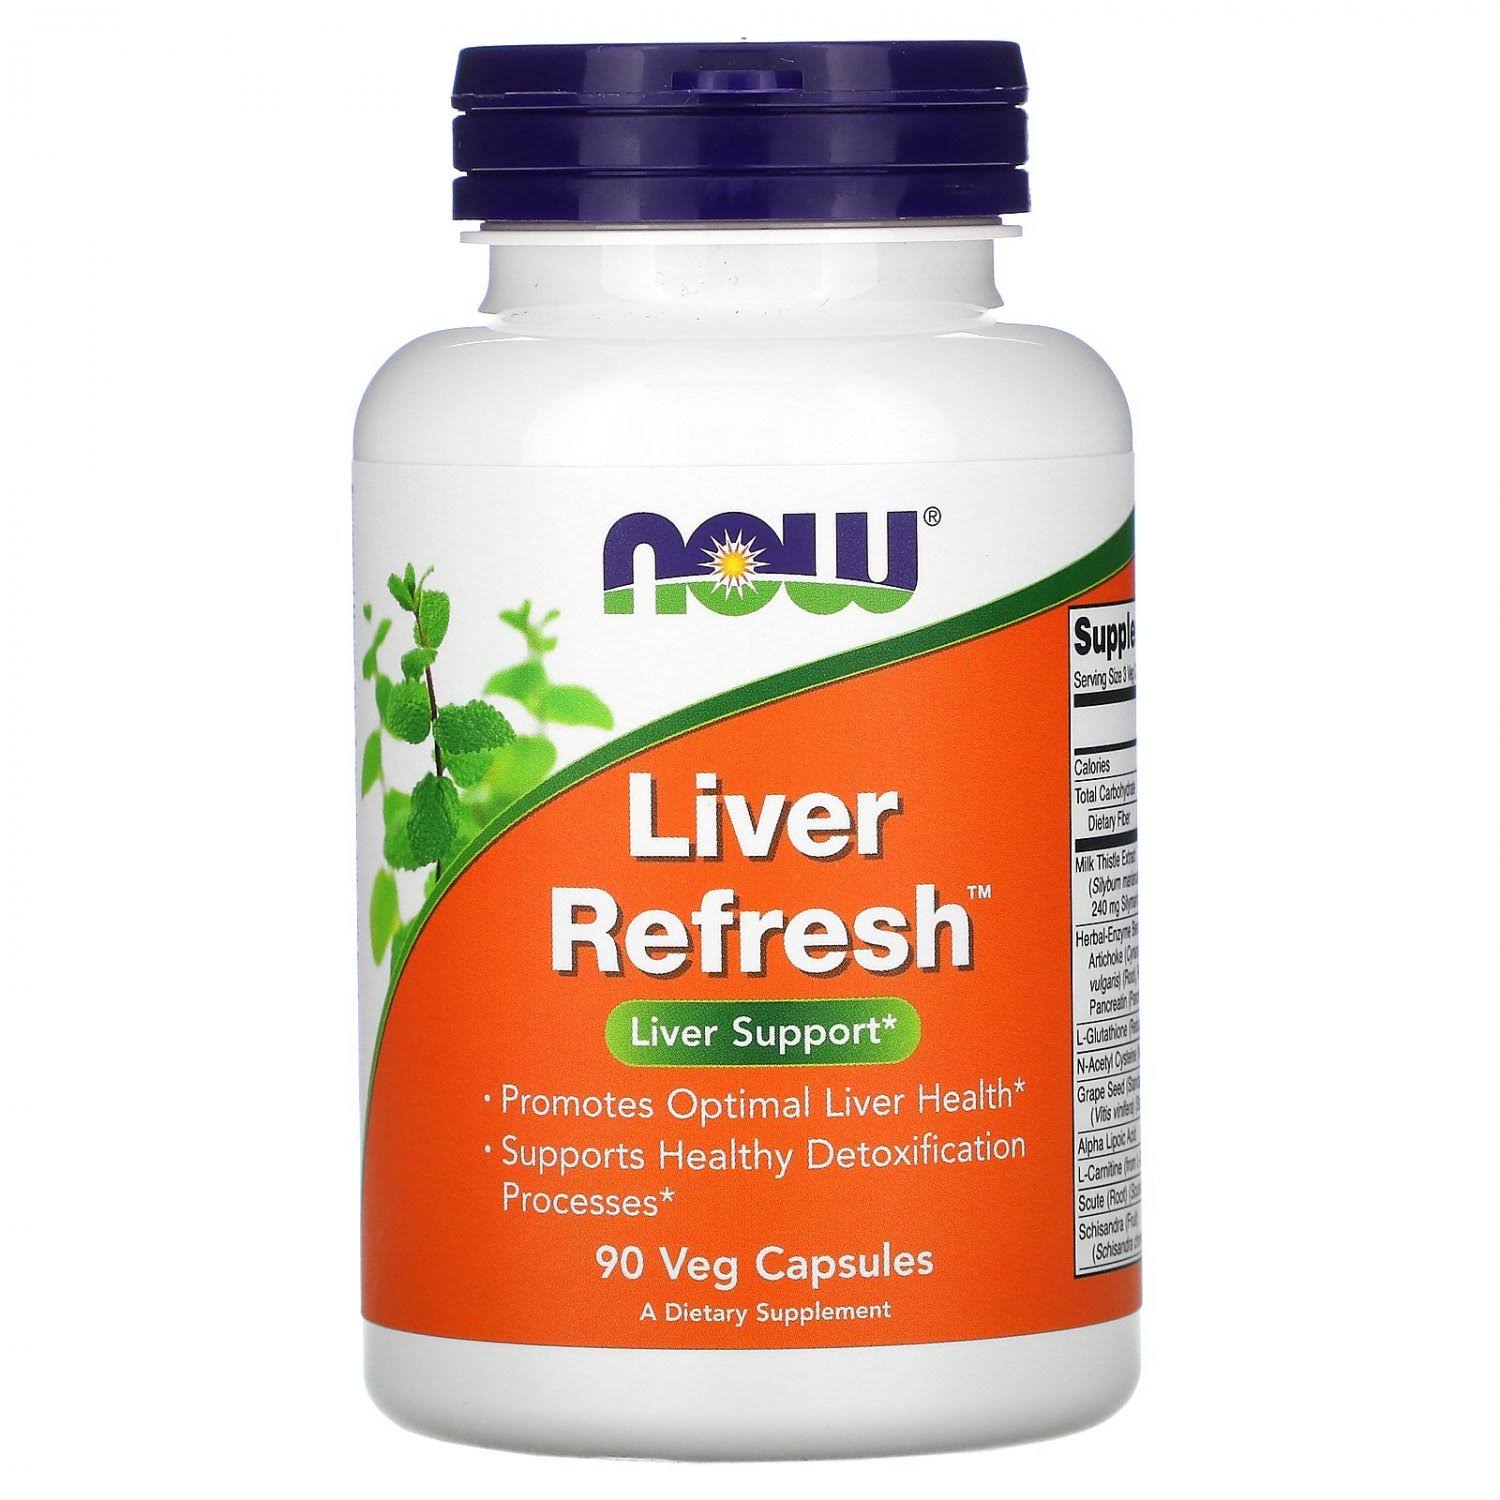 Now Liver Detoxifier & Regenerator Liver Support - 90 Capsules